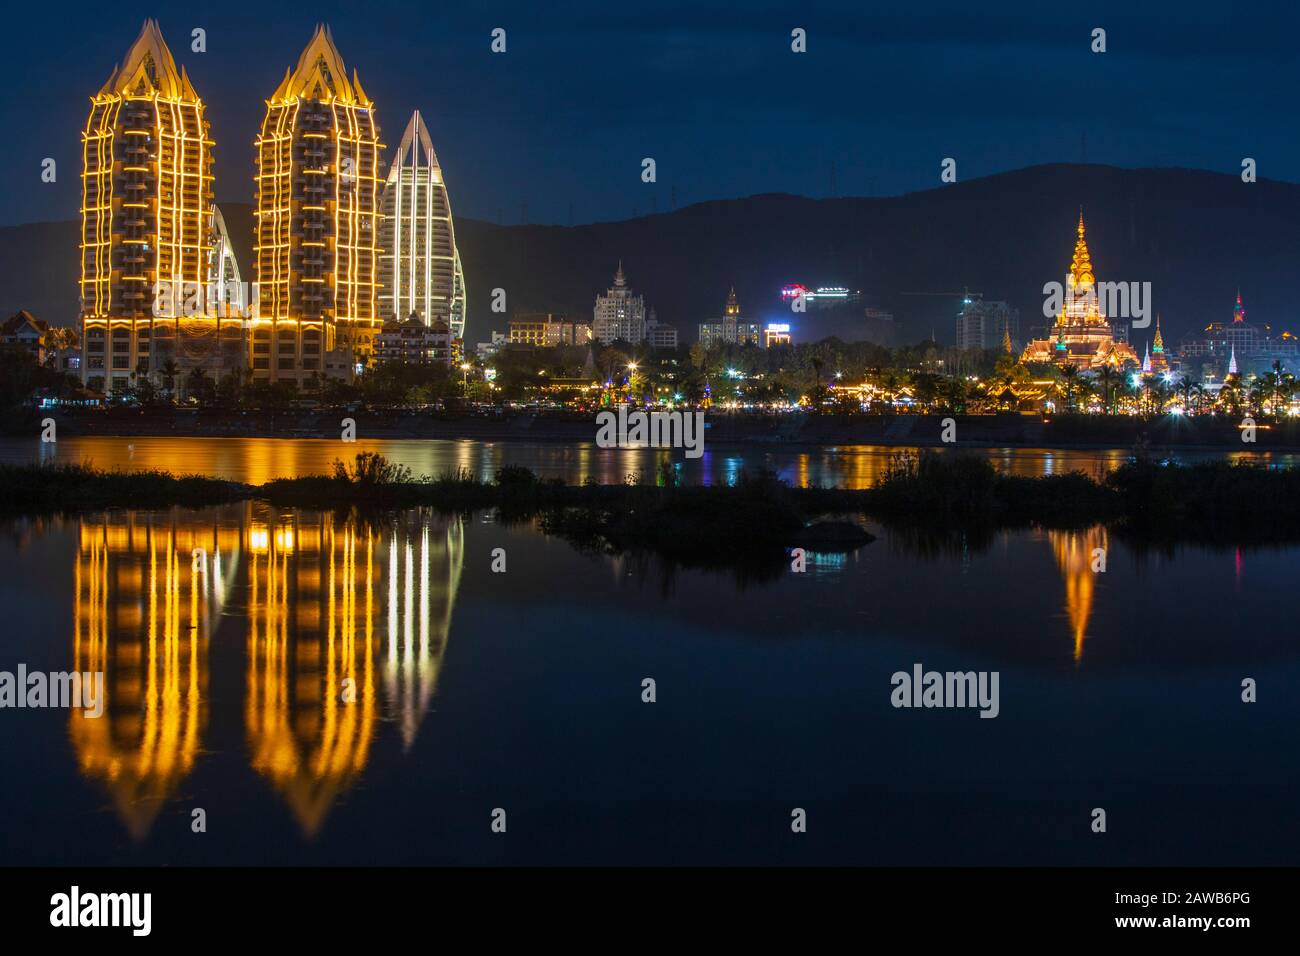 Jinghong, China - 2. Januar 2020: Große Goldene Pagode auch als Dajin-Pagode bezeichnet, die über den Mekong Fluss und die Hotels in der Nähe reflektiert Stockfoto